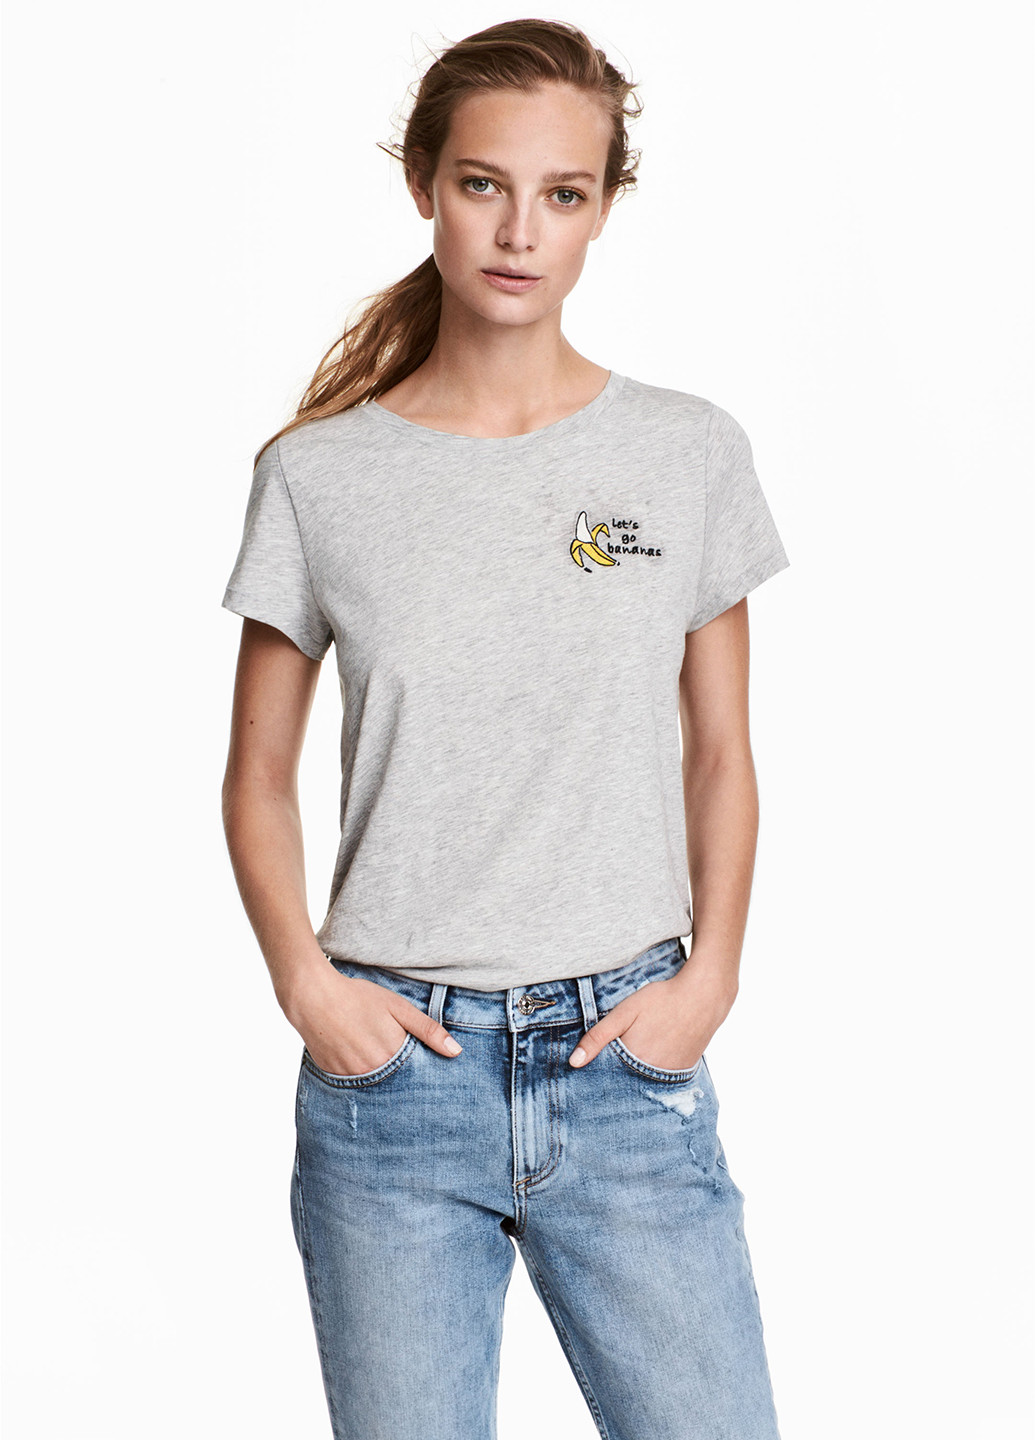 Светло-серая летняя футболка H&M